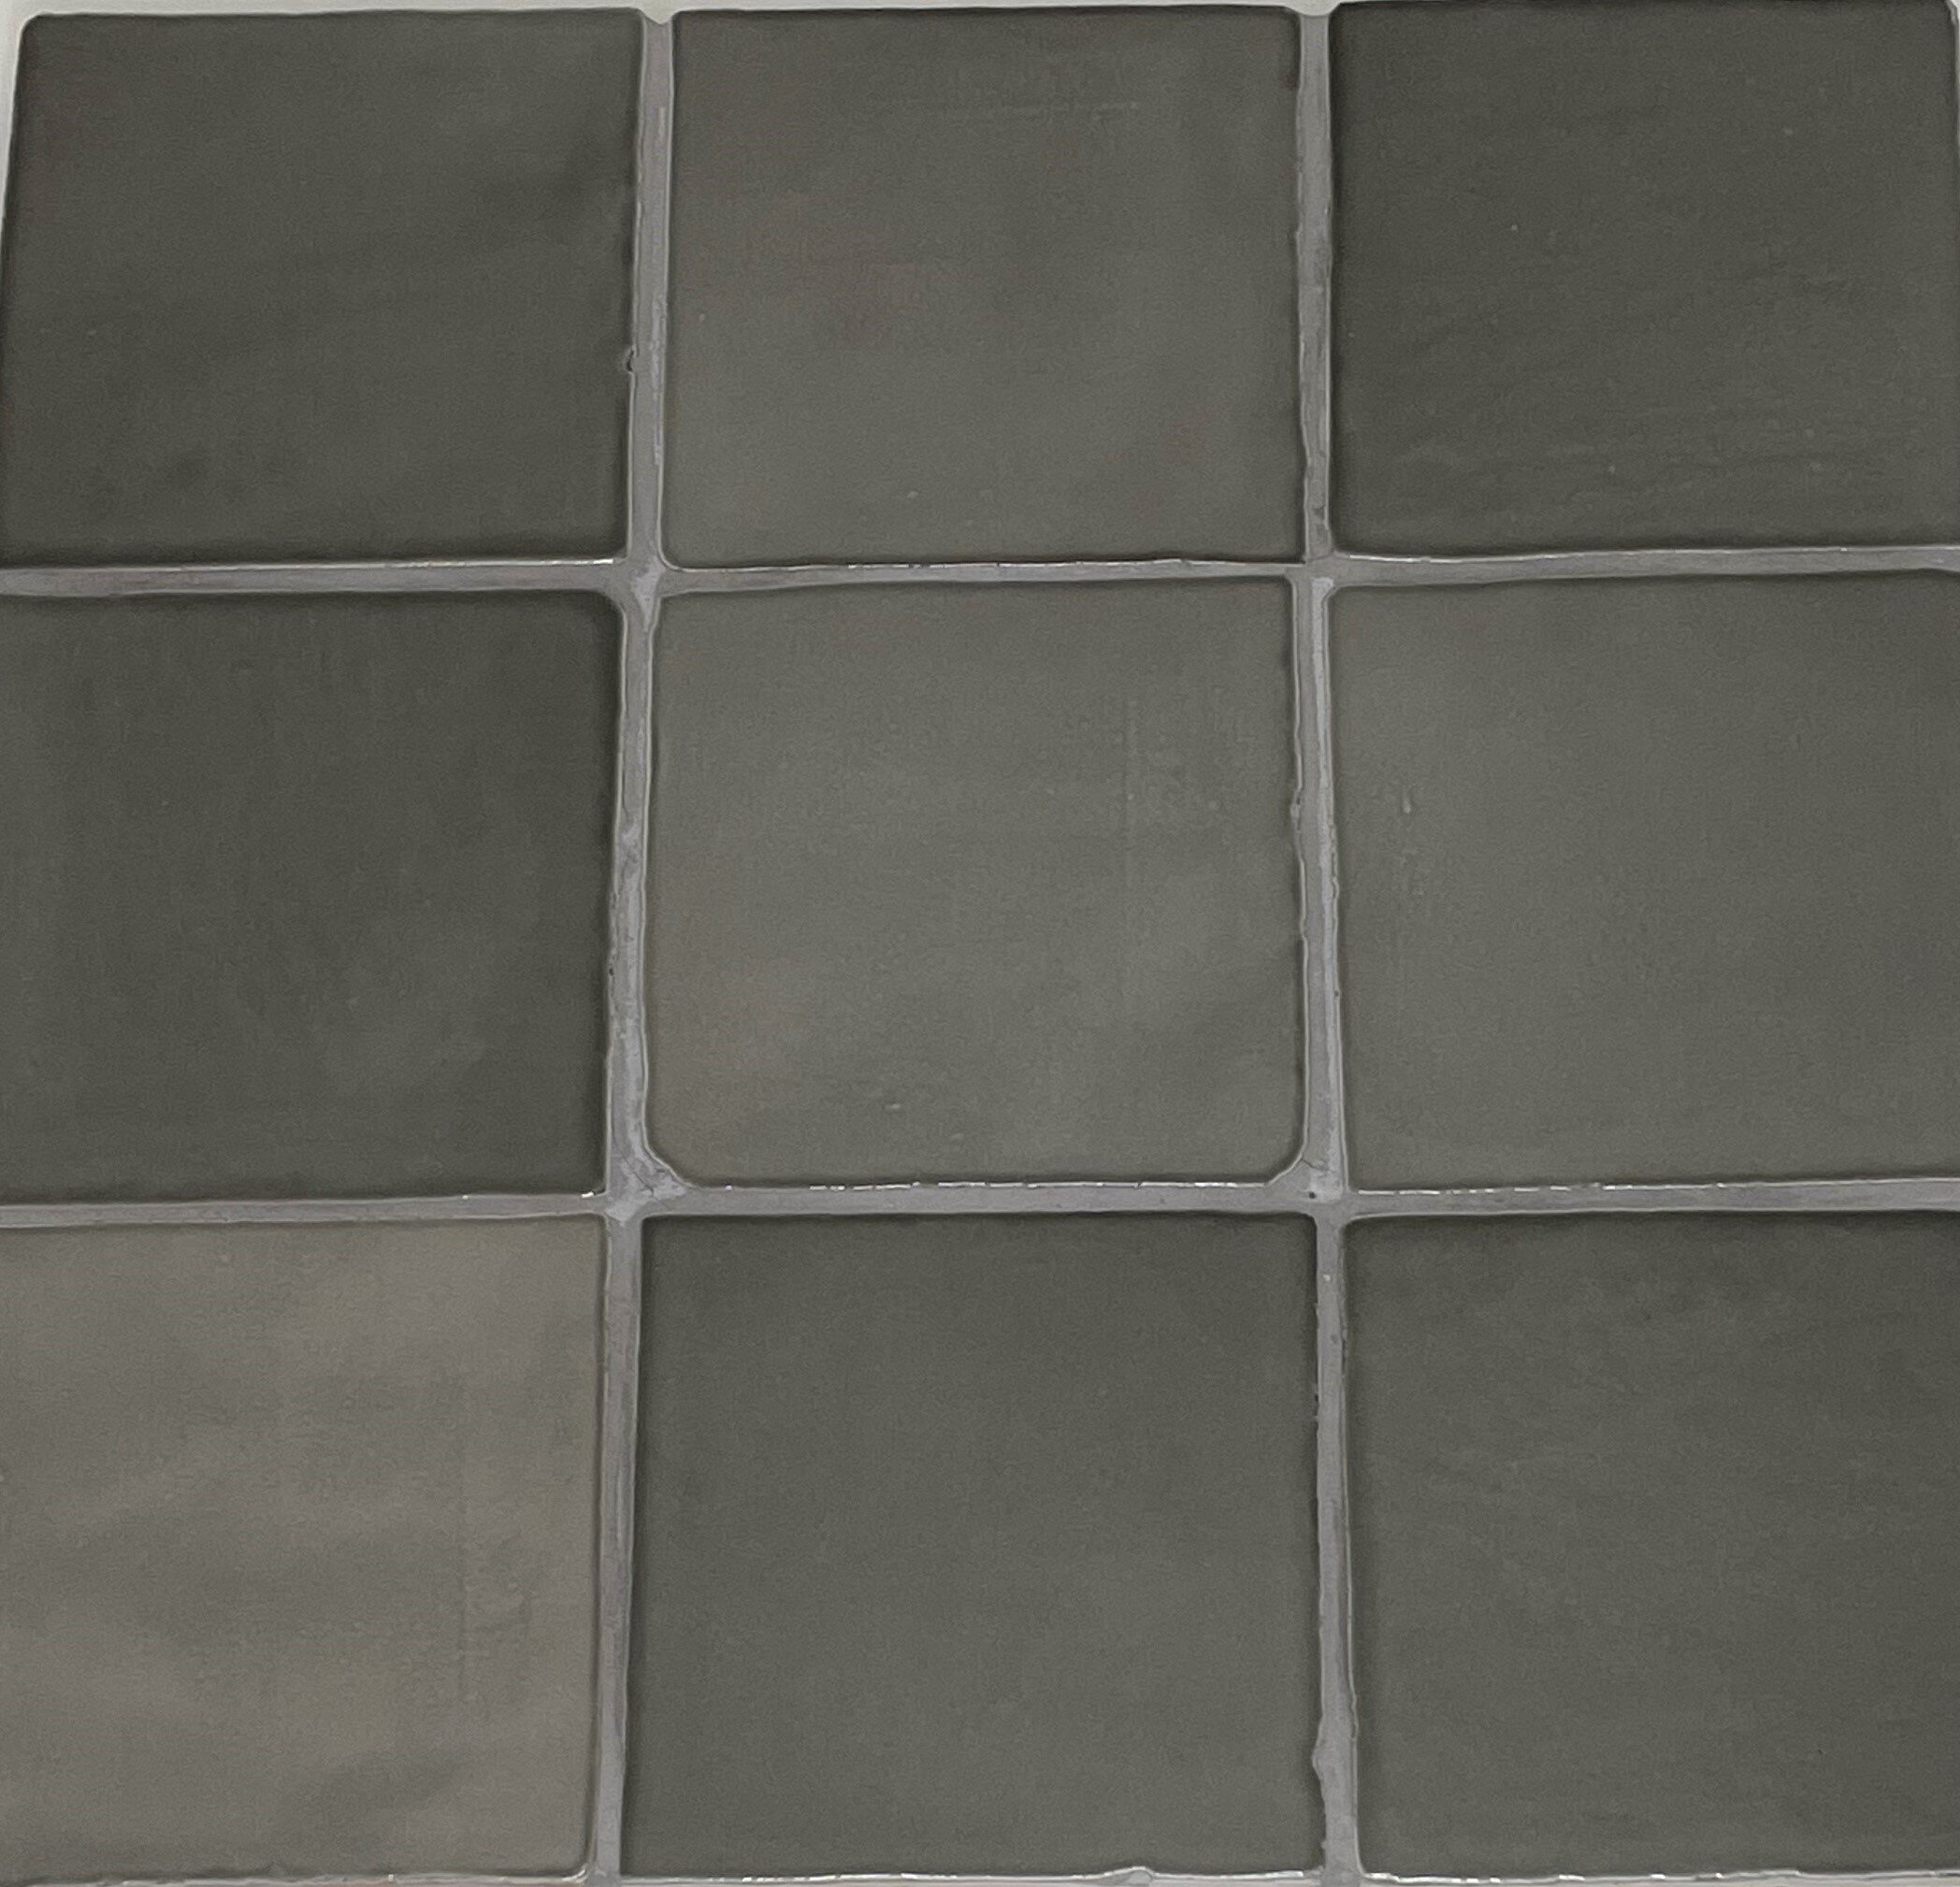 Zellige Collection 4" x 4" Tile in Color Dark